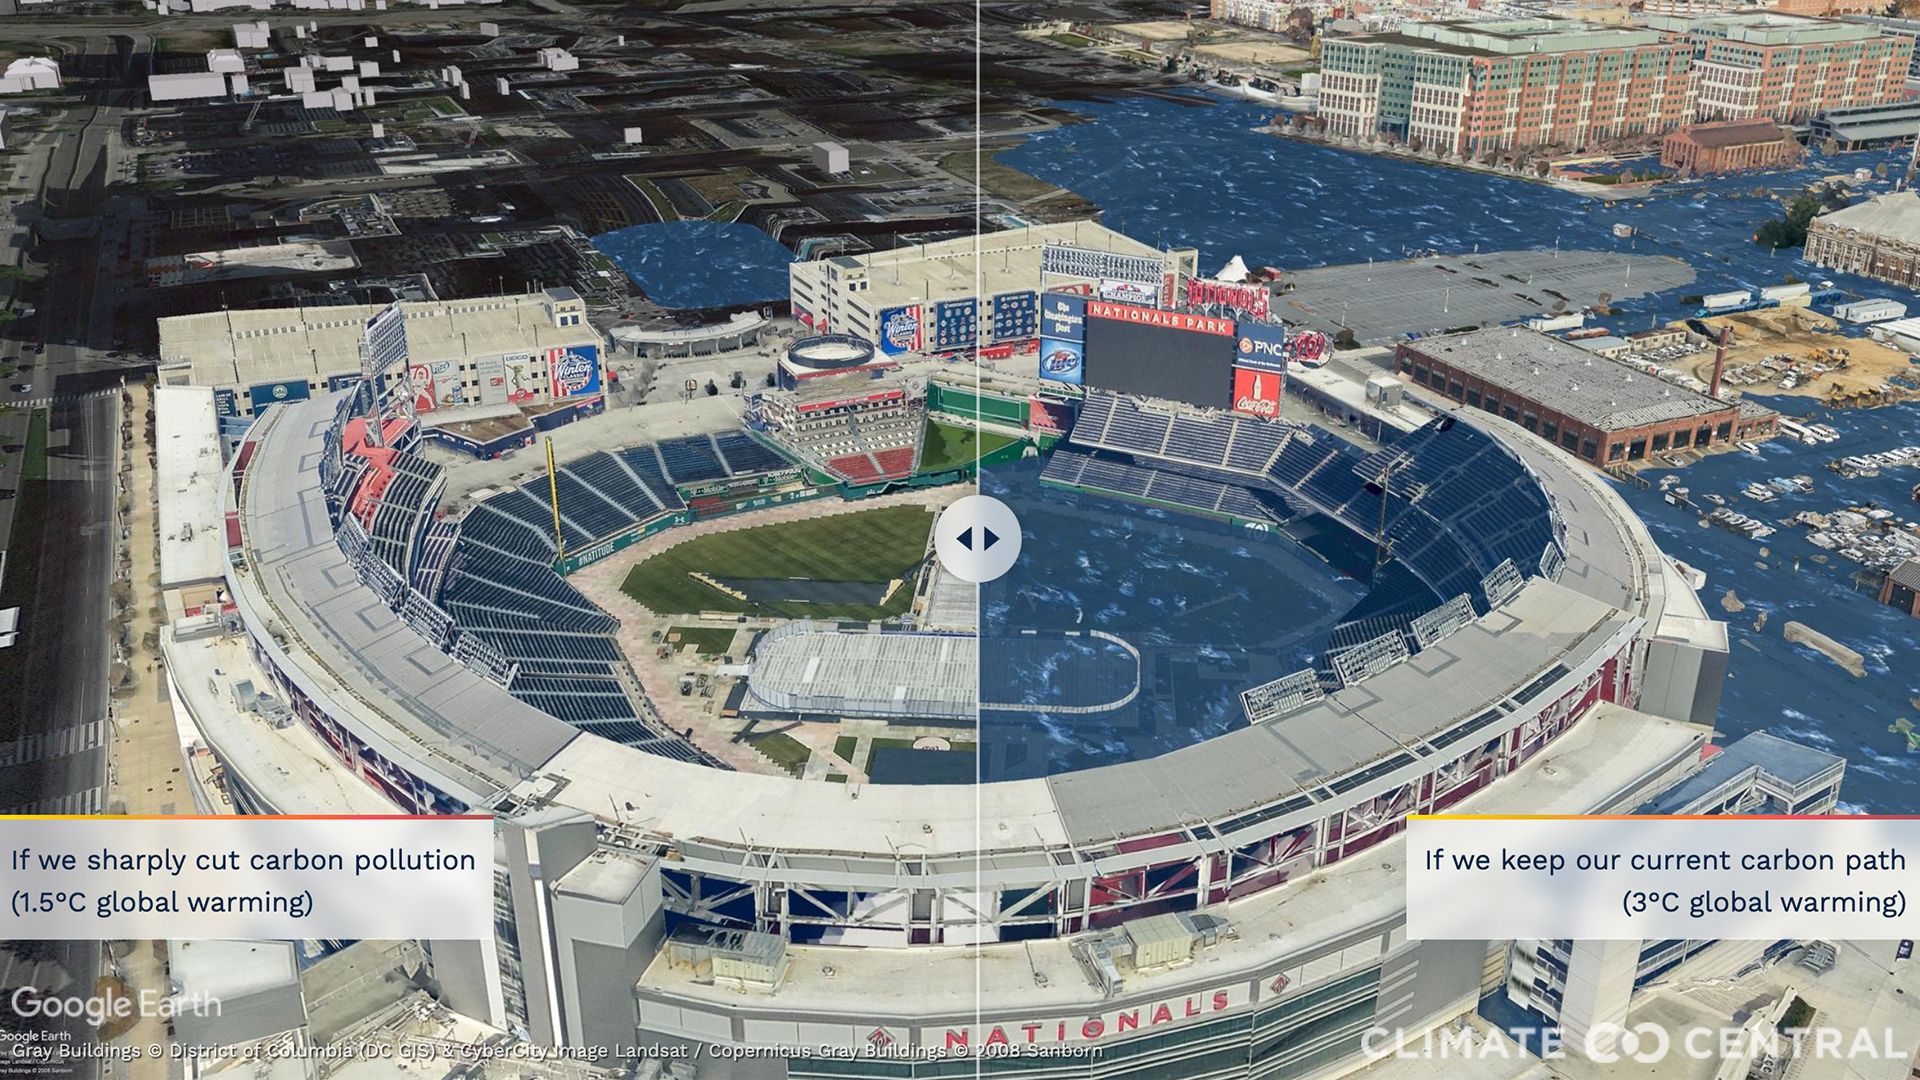 Sea level rise scenarios for Washington Nationals Baseball Park in Washington, D.C.